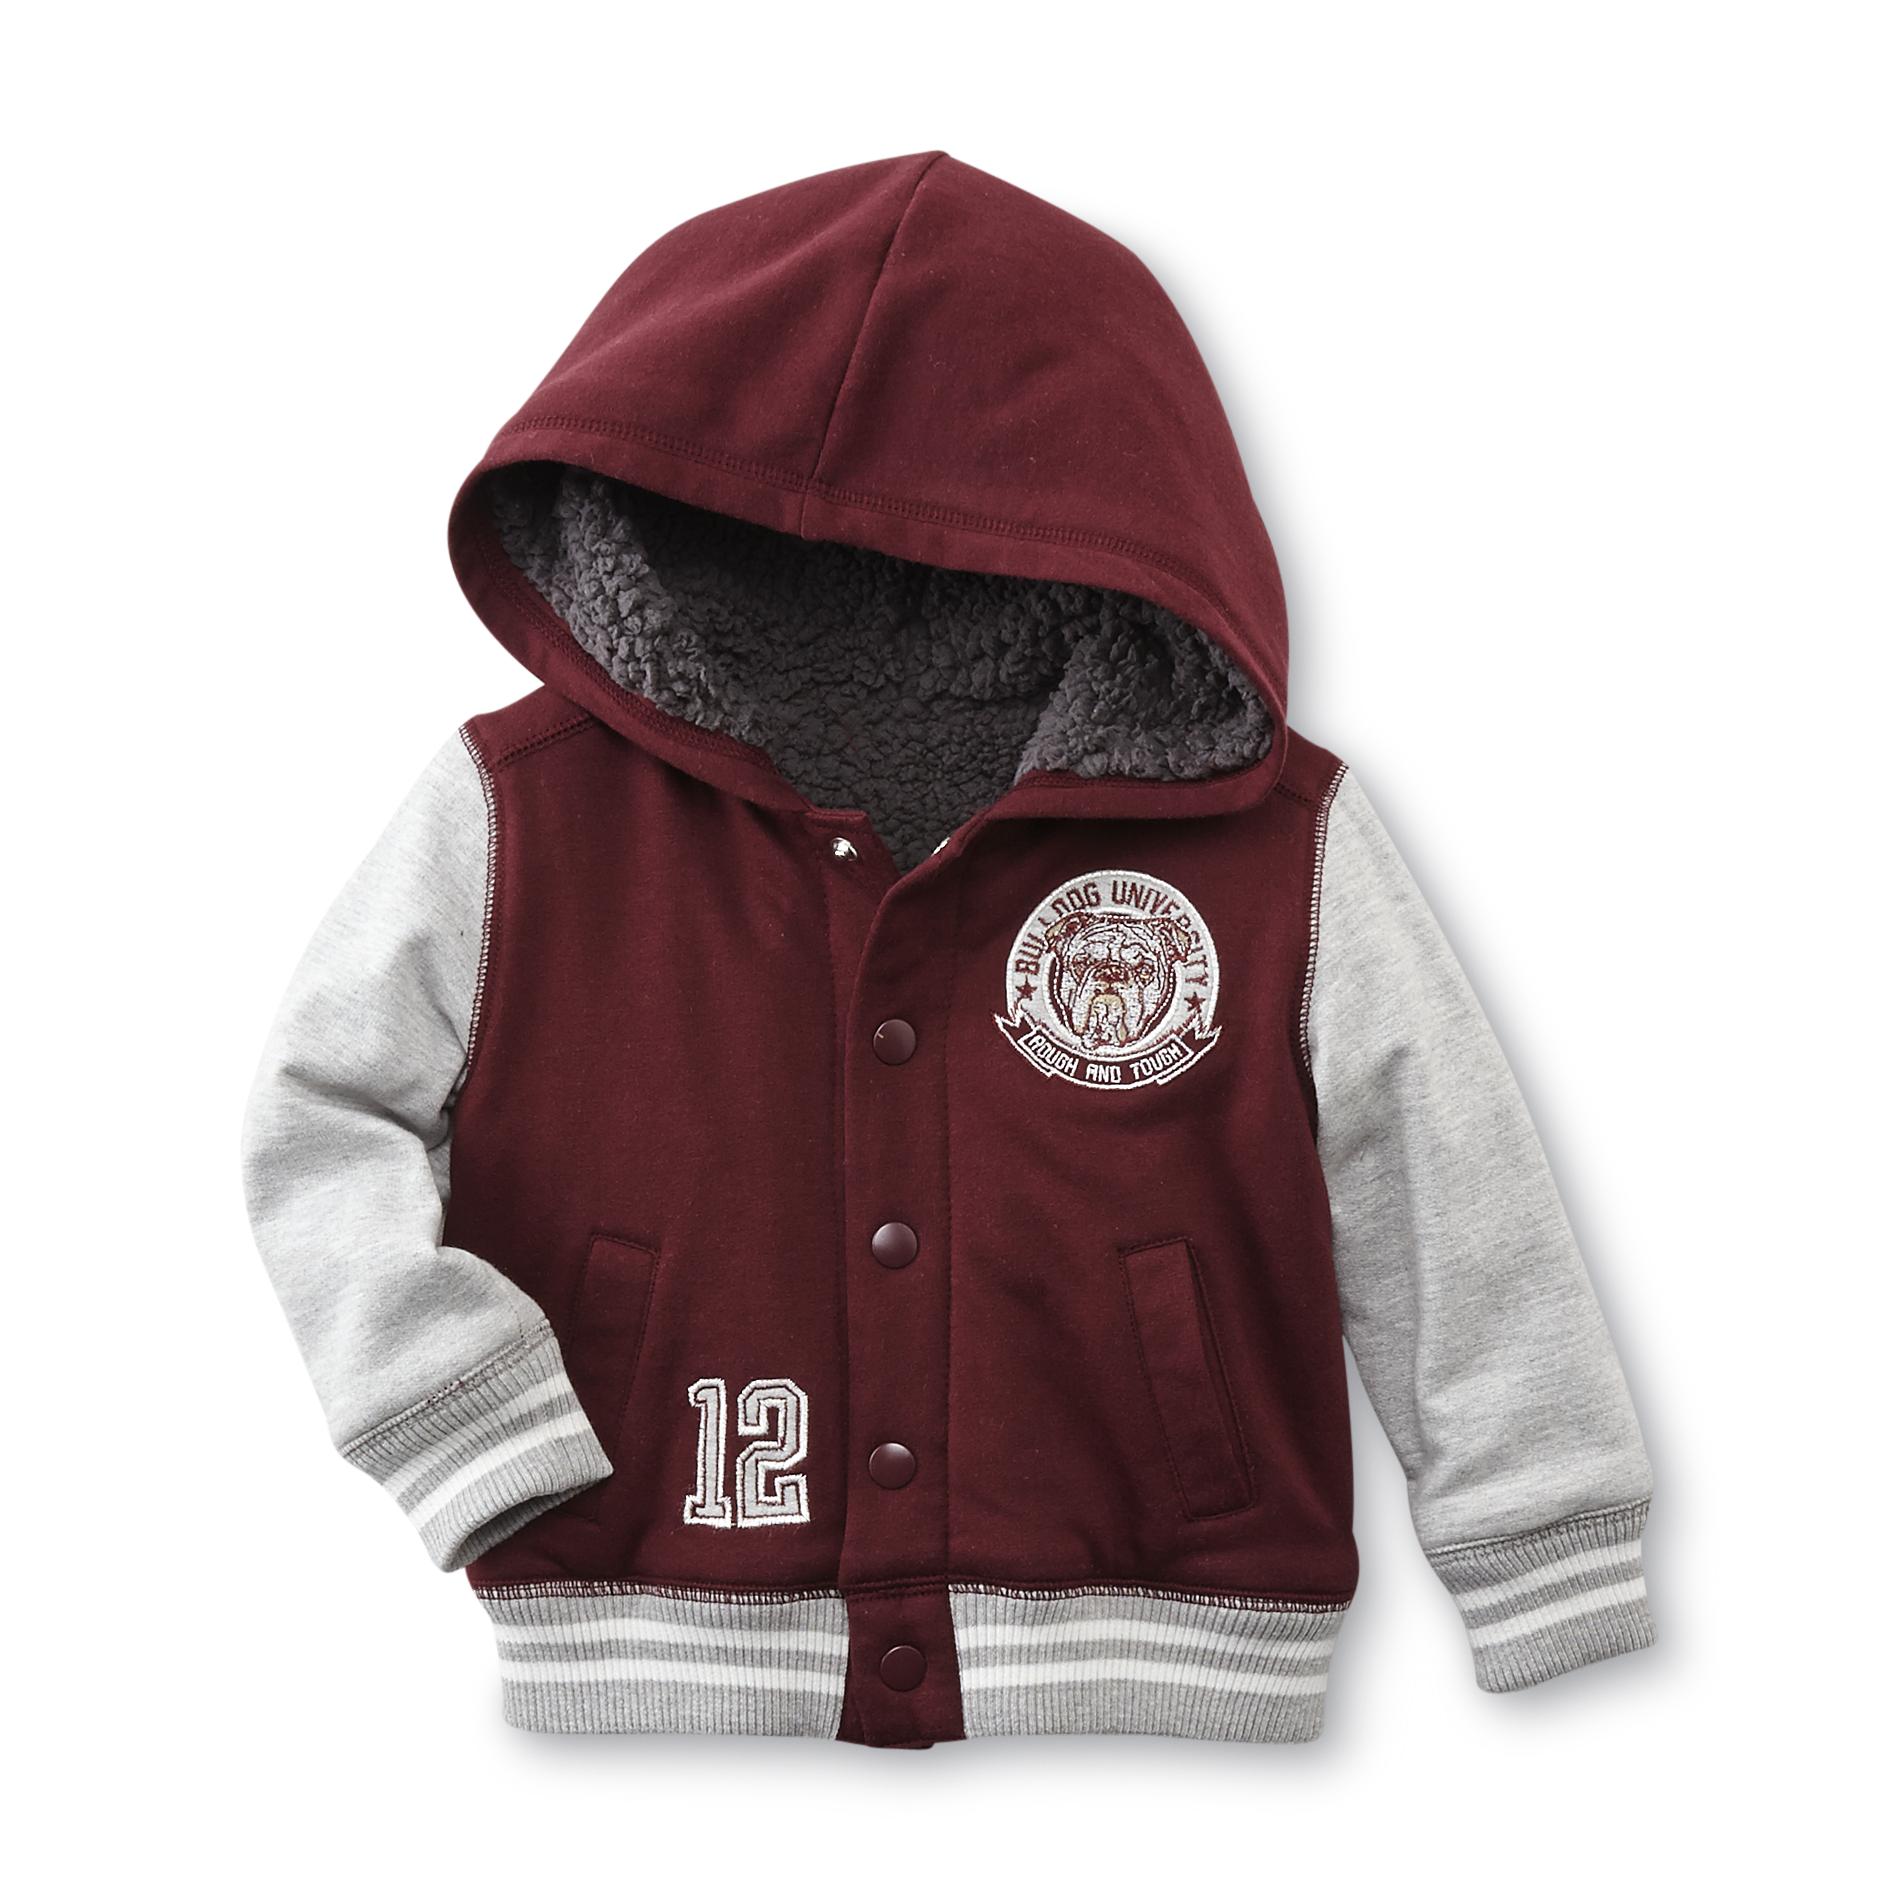 Toughskins Infant & Toddler Boy's Varsity Hoodie Jacket - Bulldog University